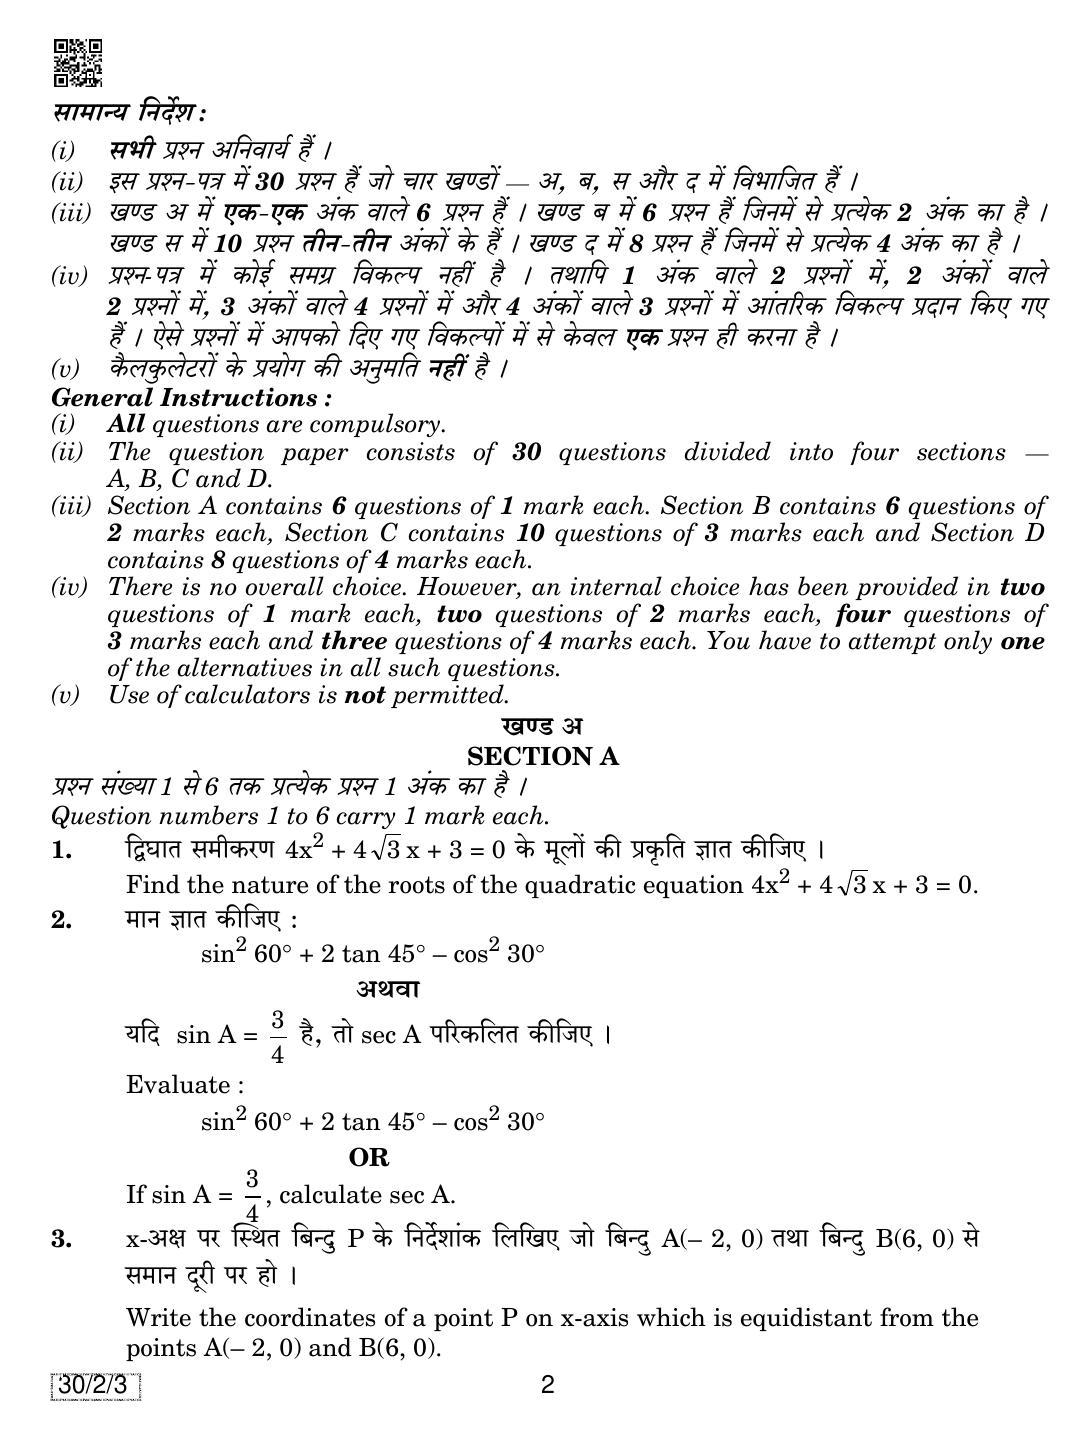 CBSE Class 10 Maths (30/2/3 - SET 3) 2019 Question Paper - Page 2